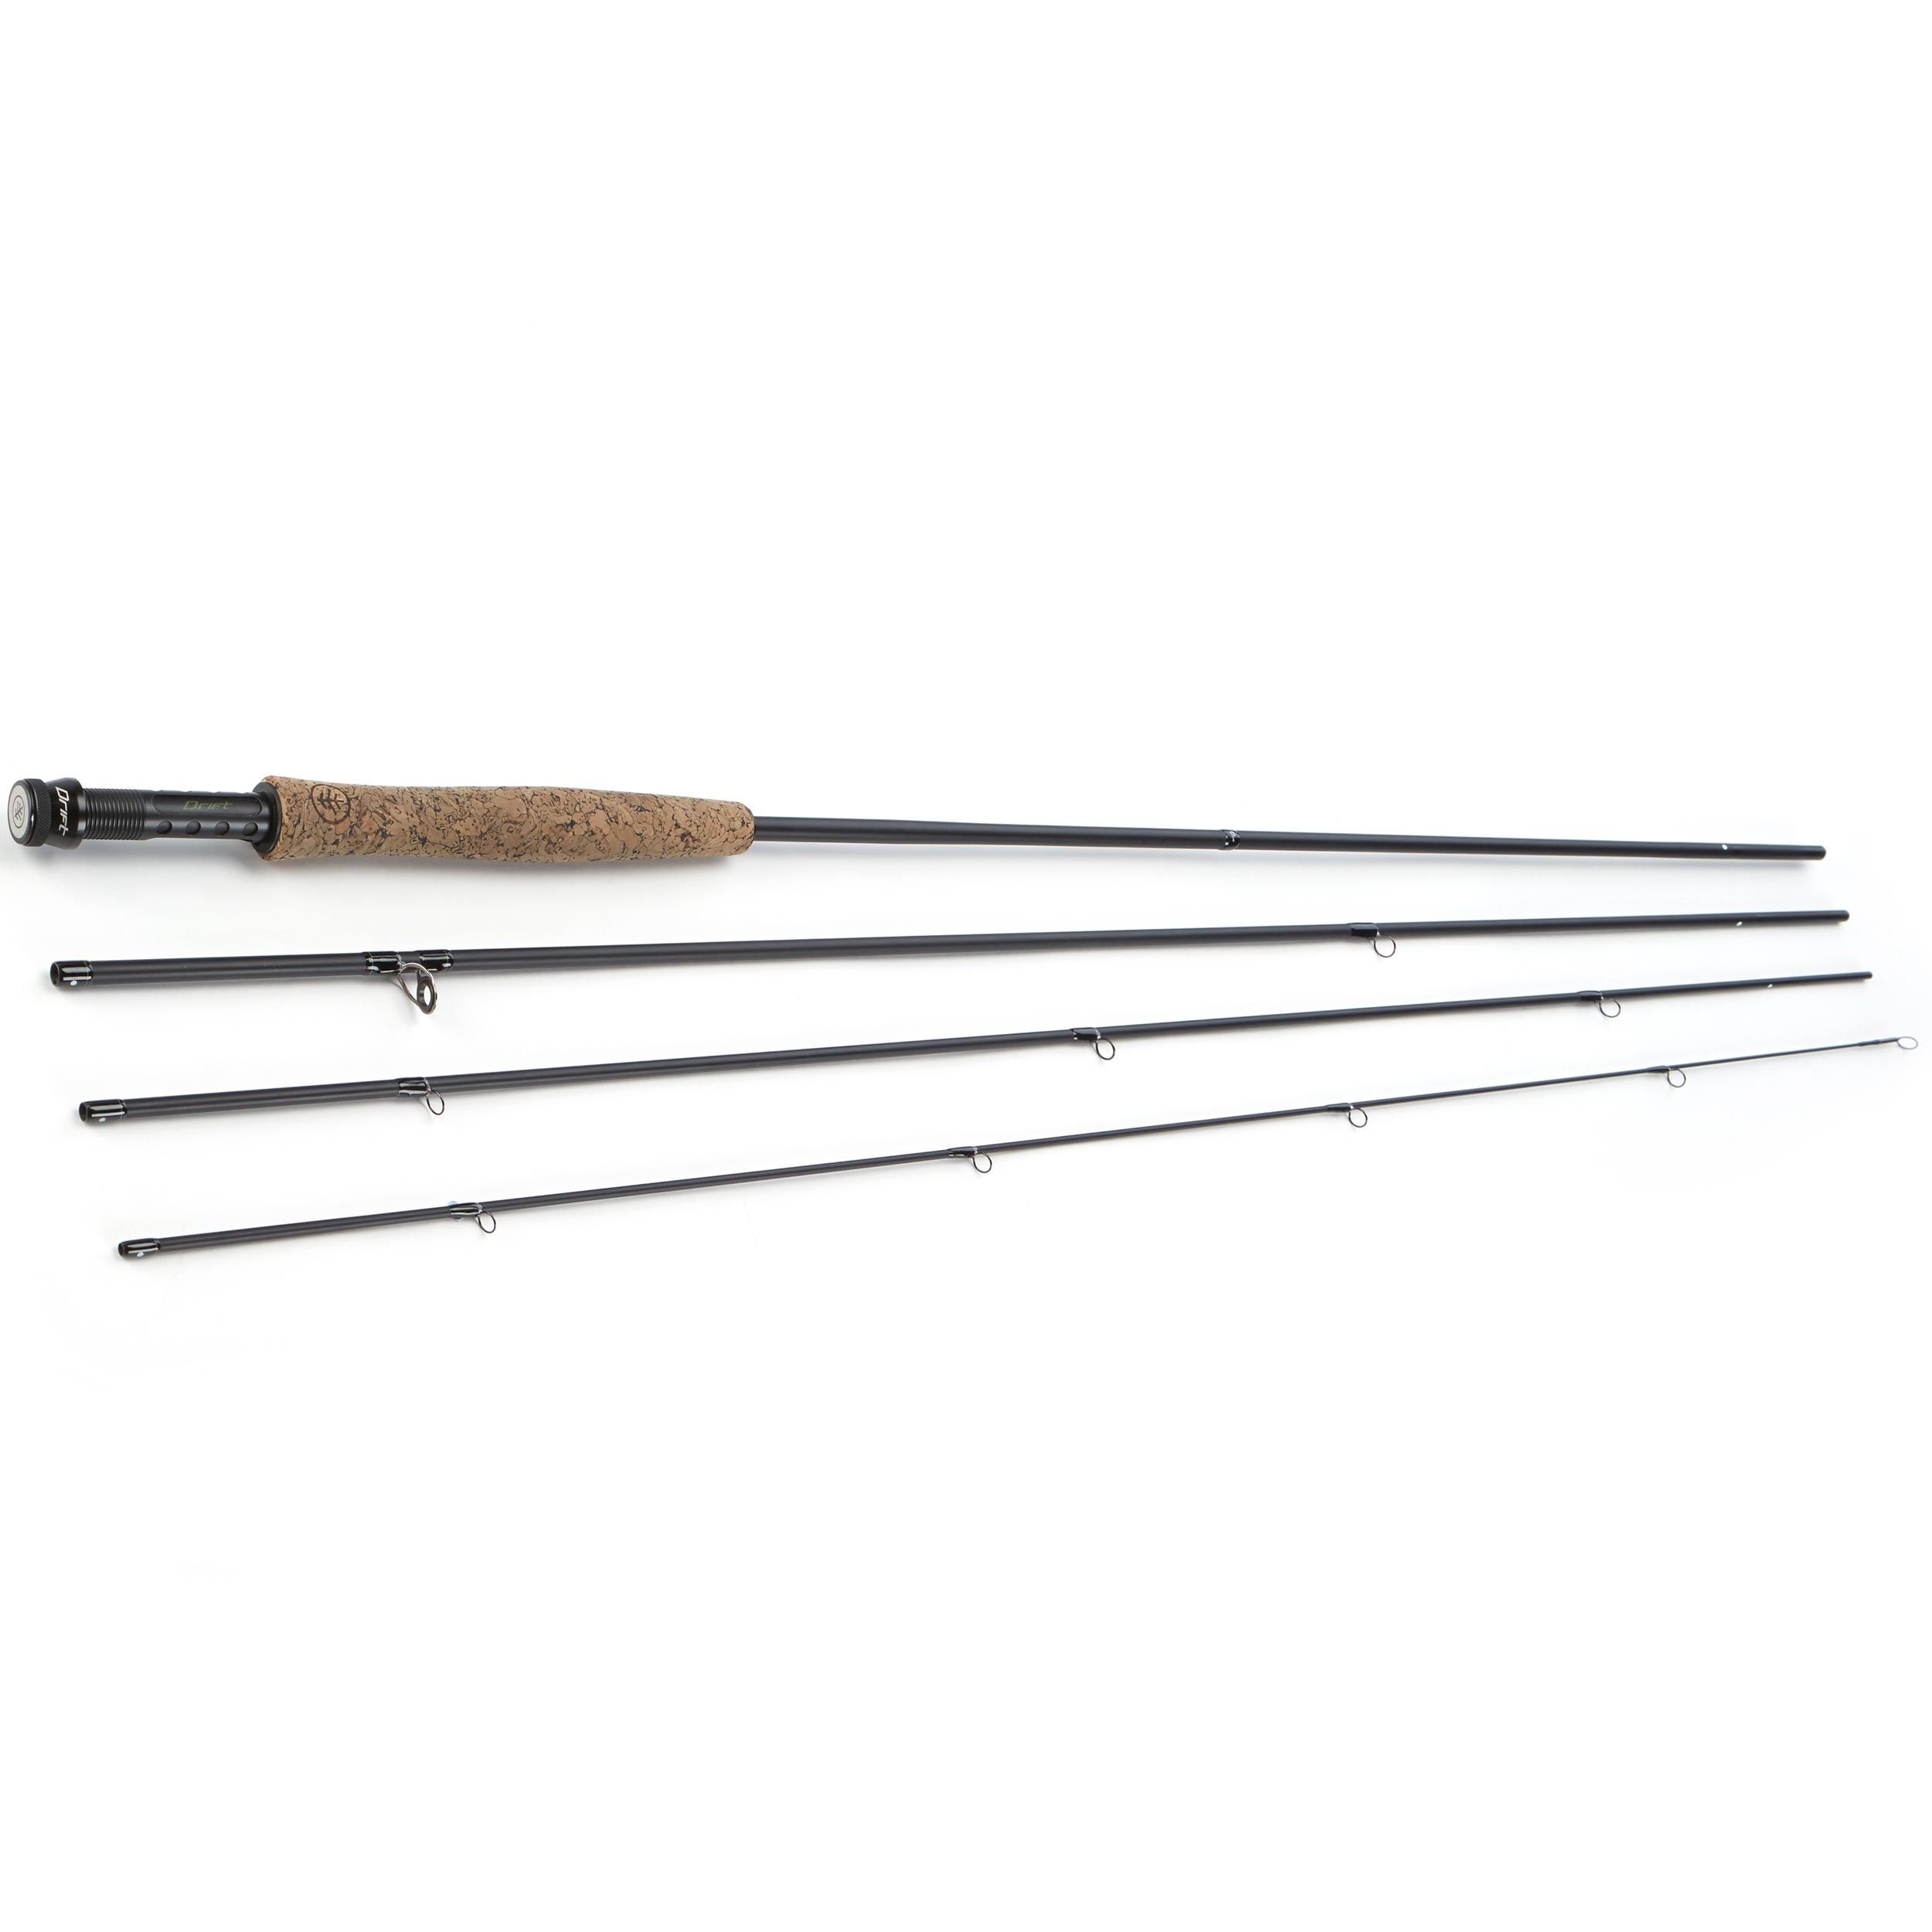 Wychwood Drift XL Fly Rods - Light River Fishing Rod